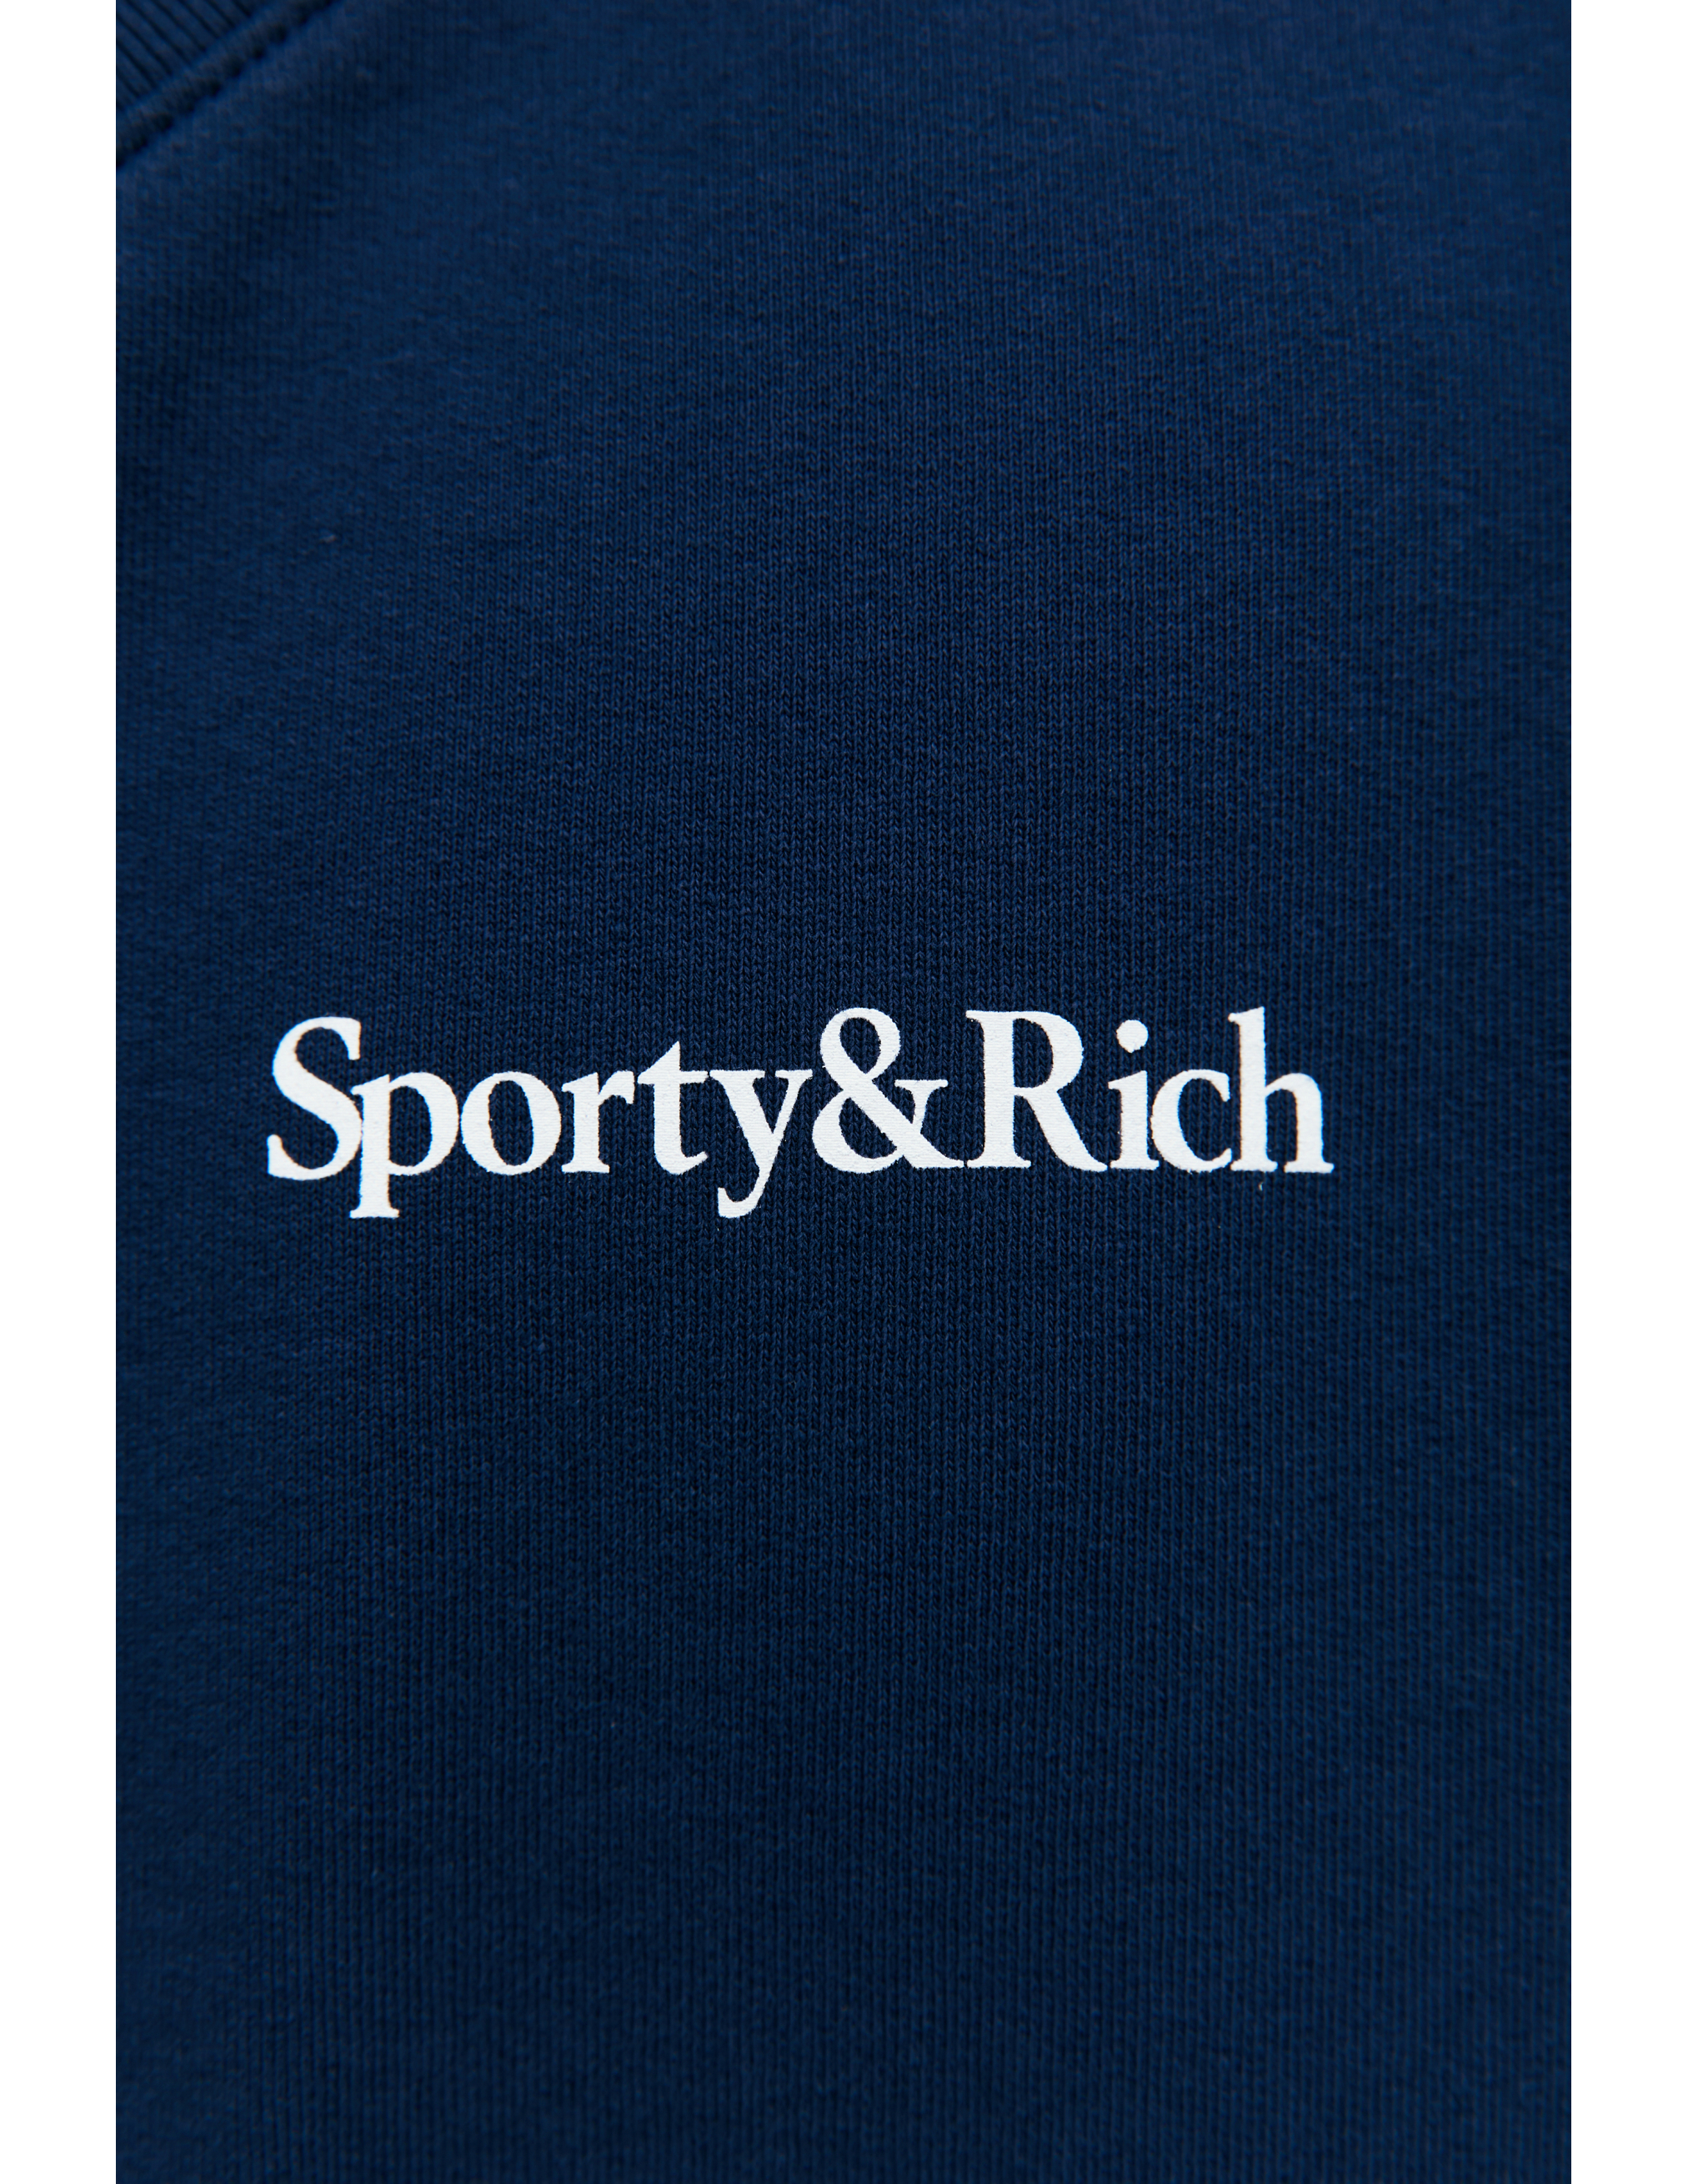 Синий жилет с логотипом SPORTY & RICH VN841NA, размер S;M;L;XL - фото 4